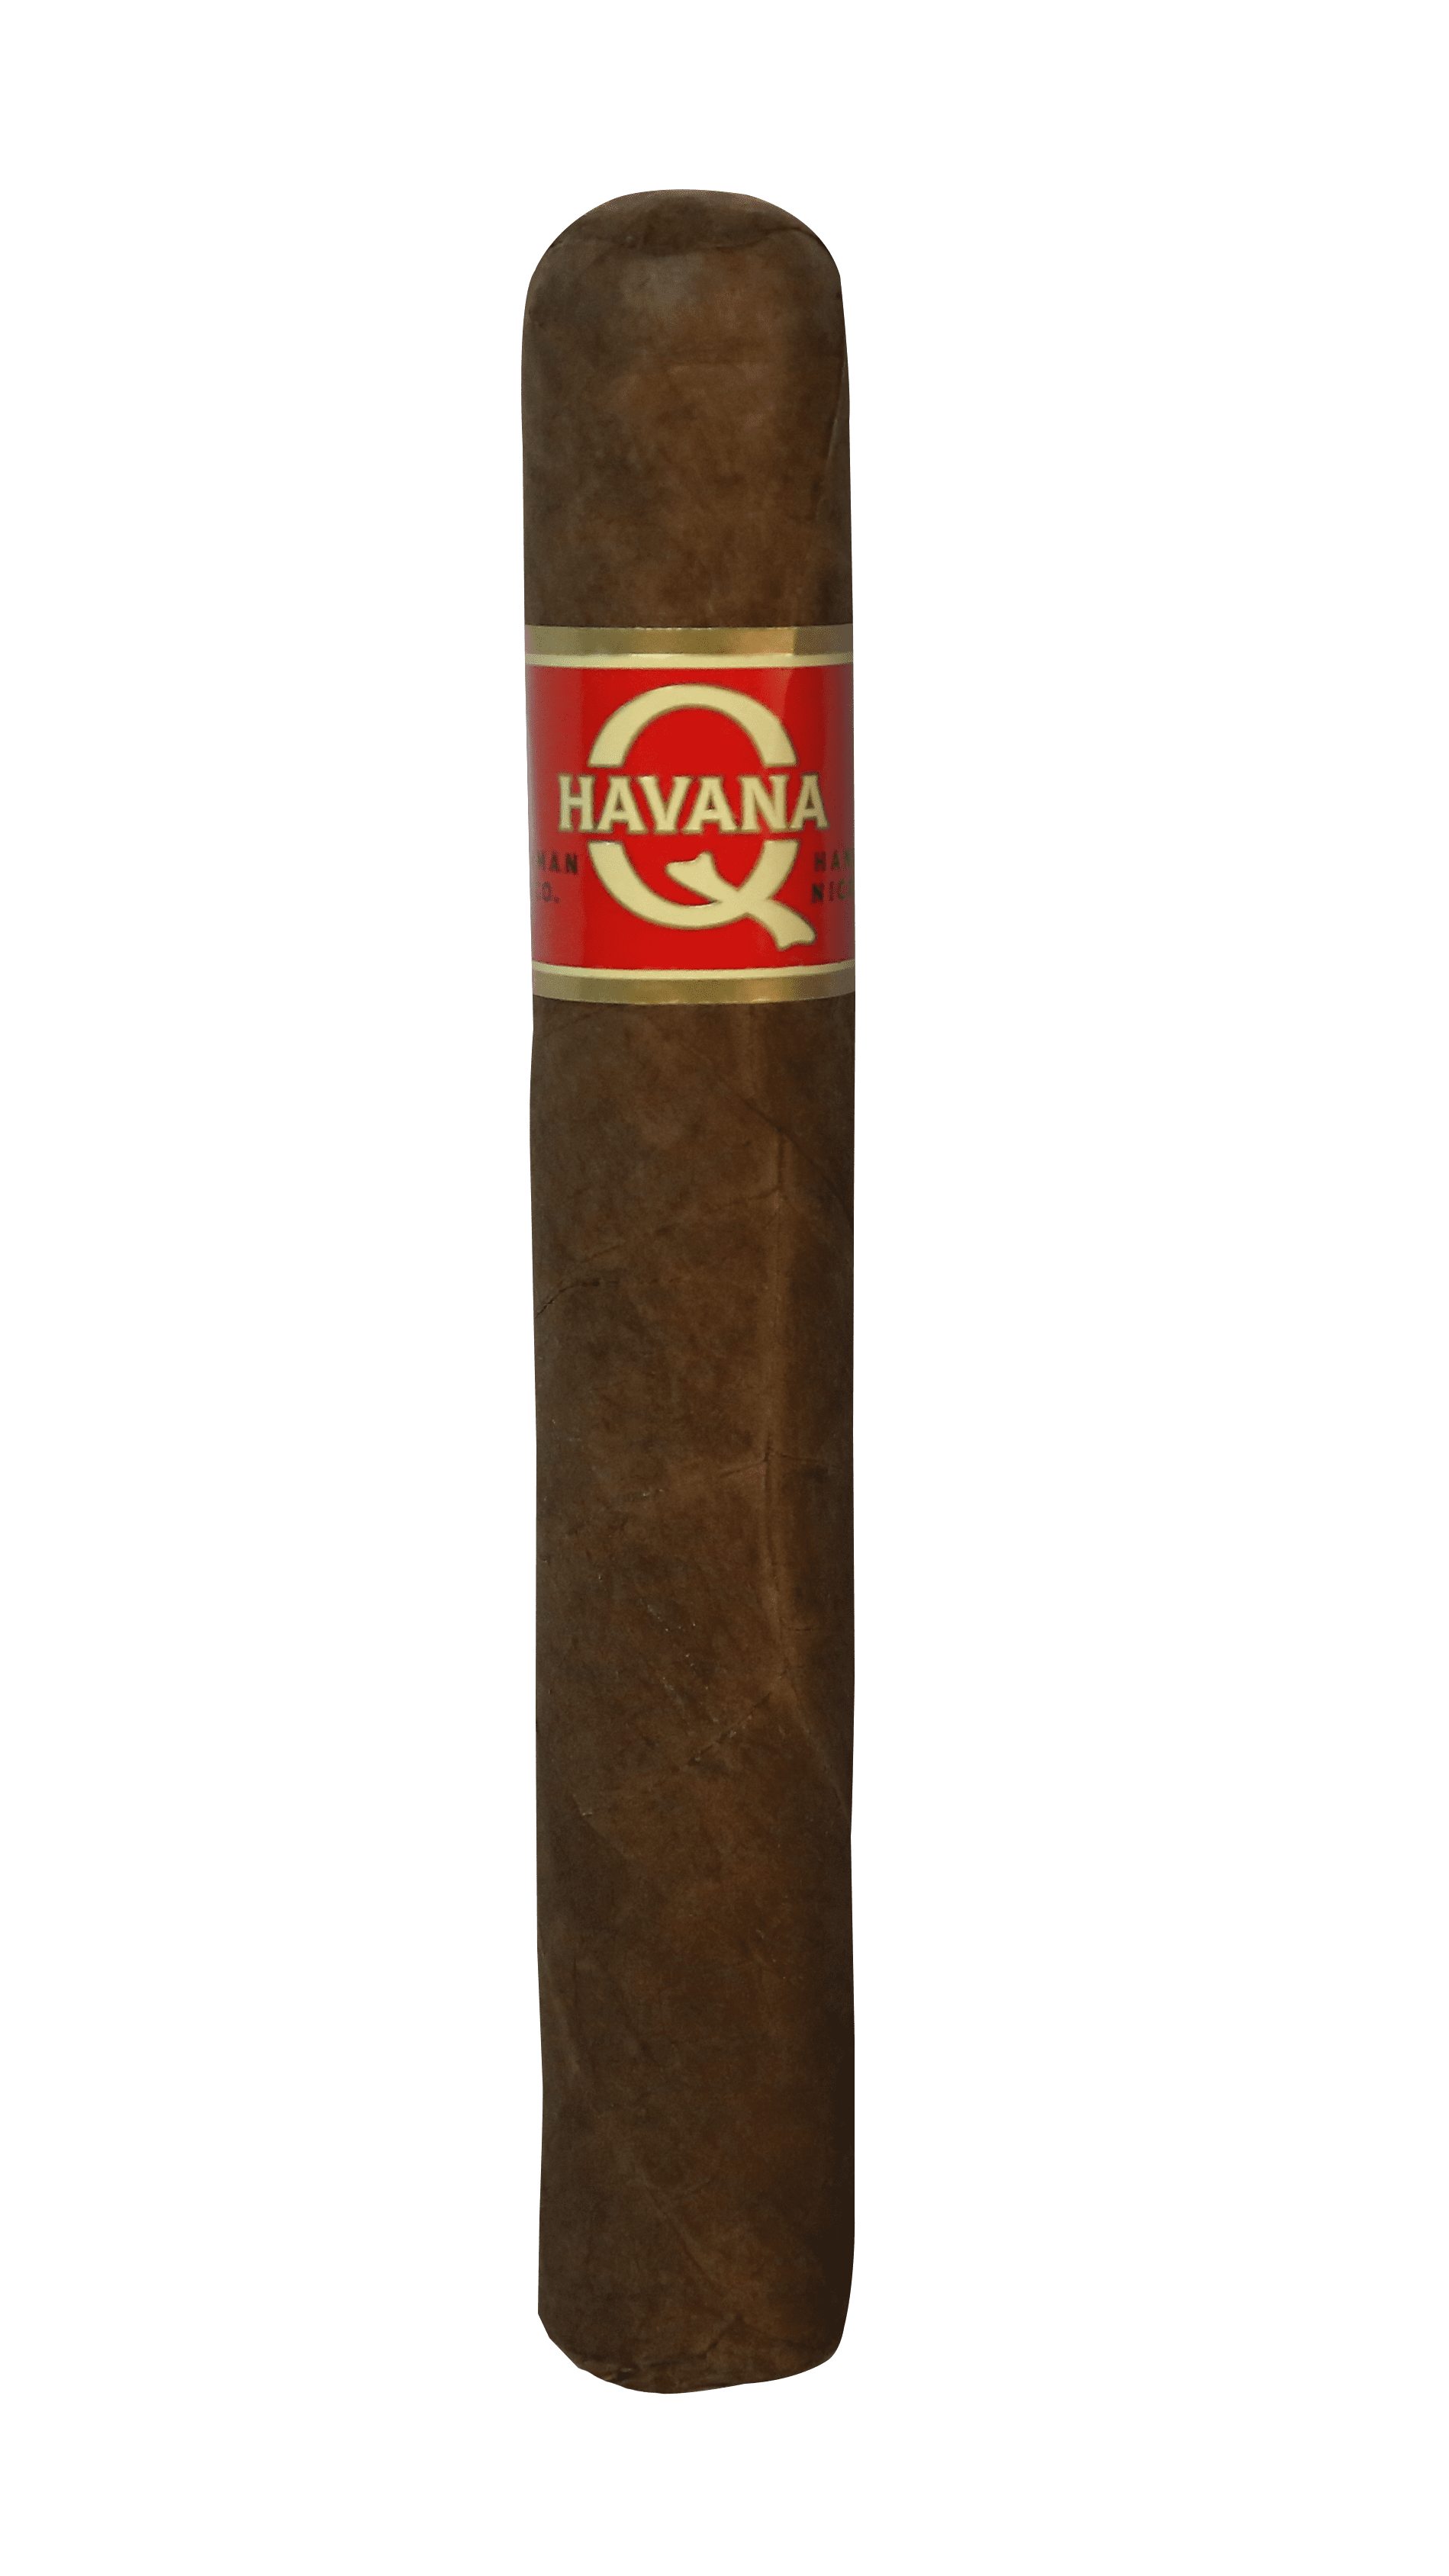 Single Havana Q Double Toro cigar